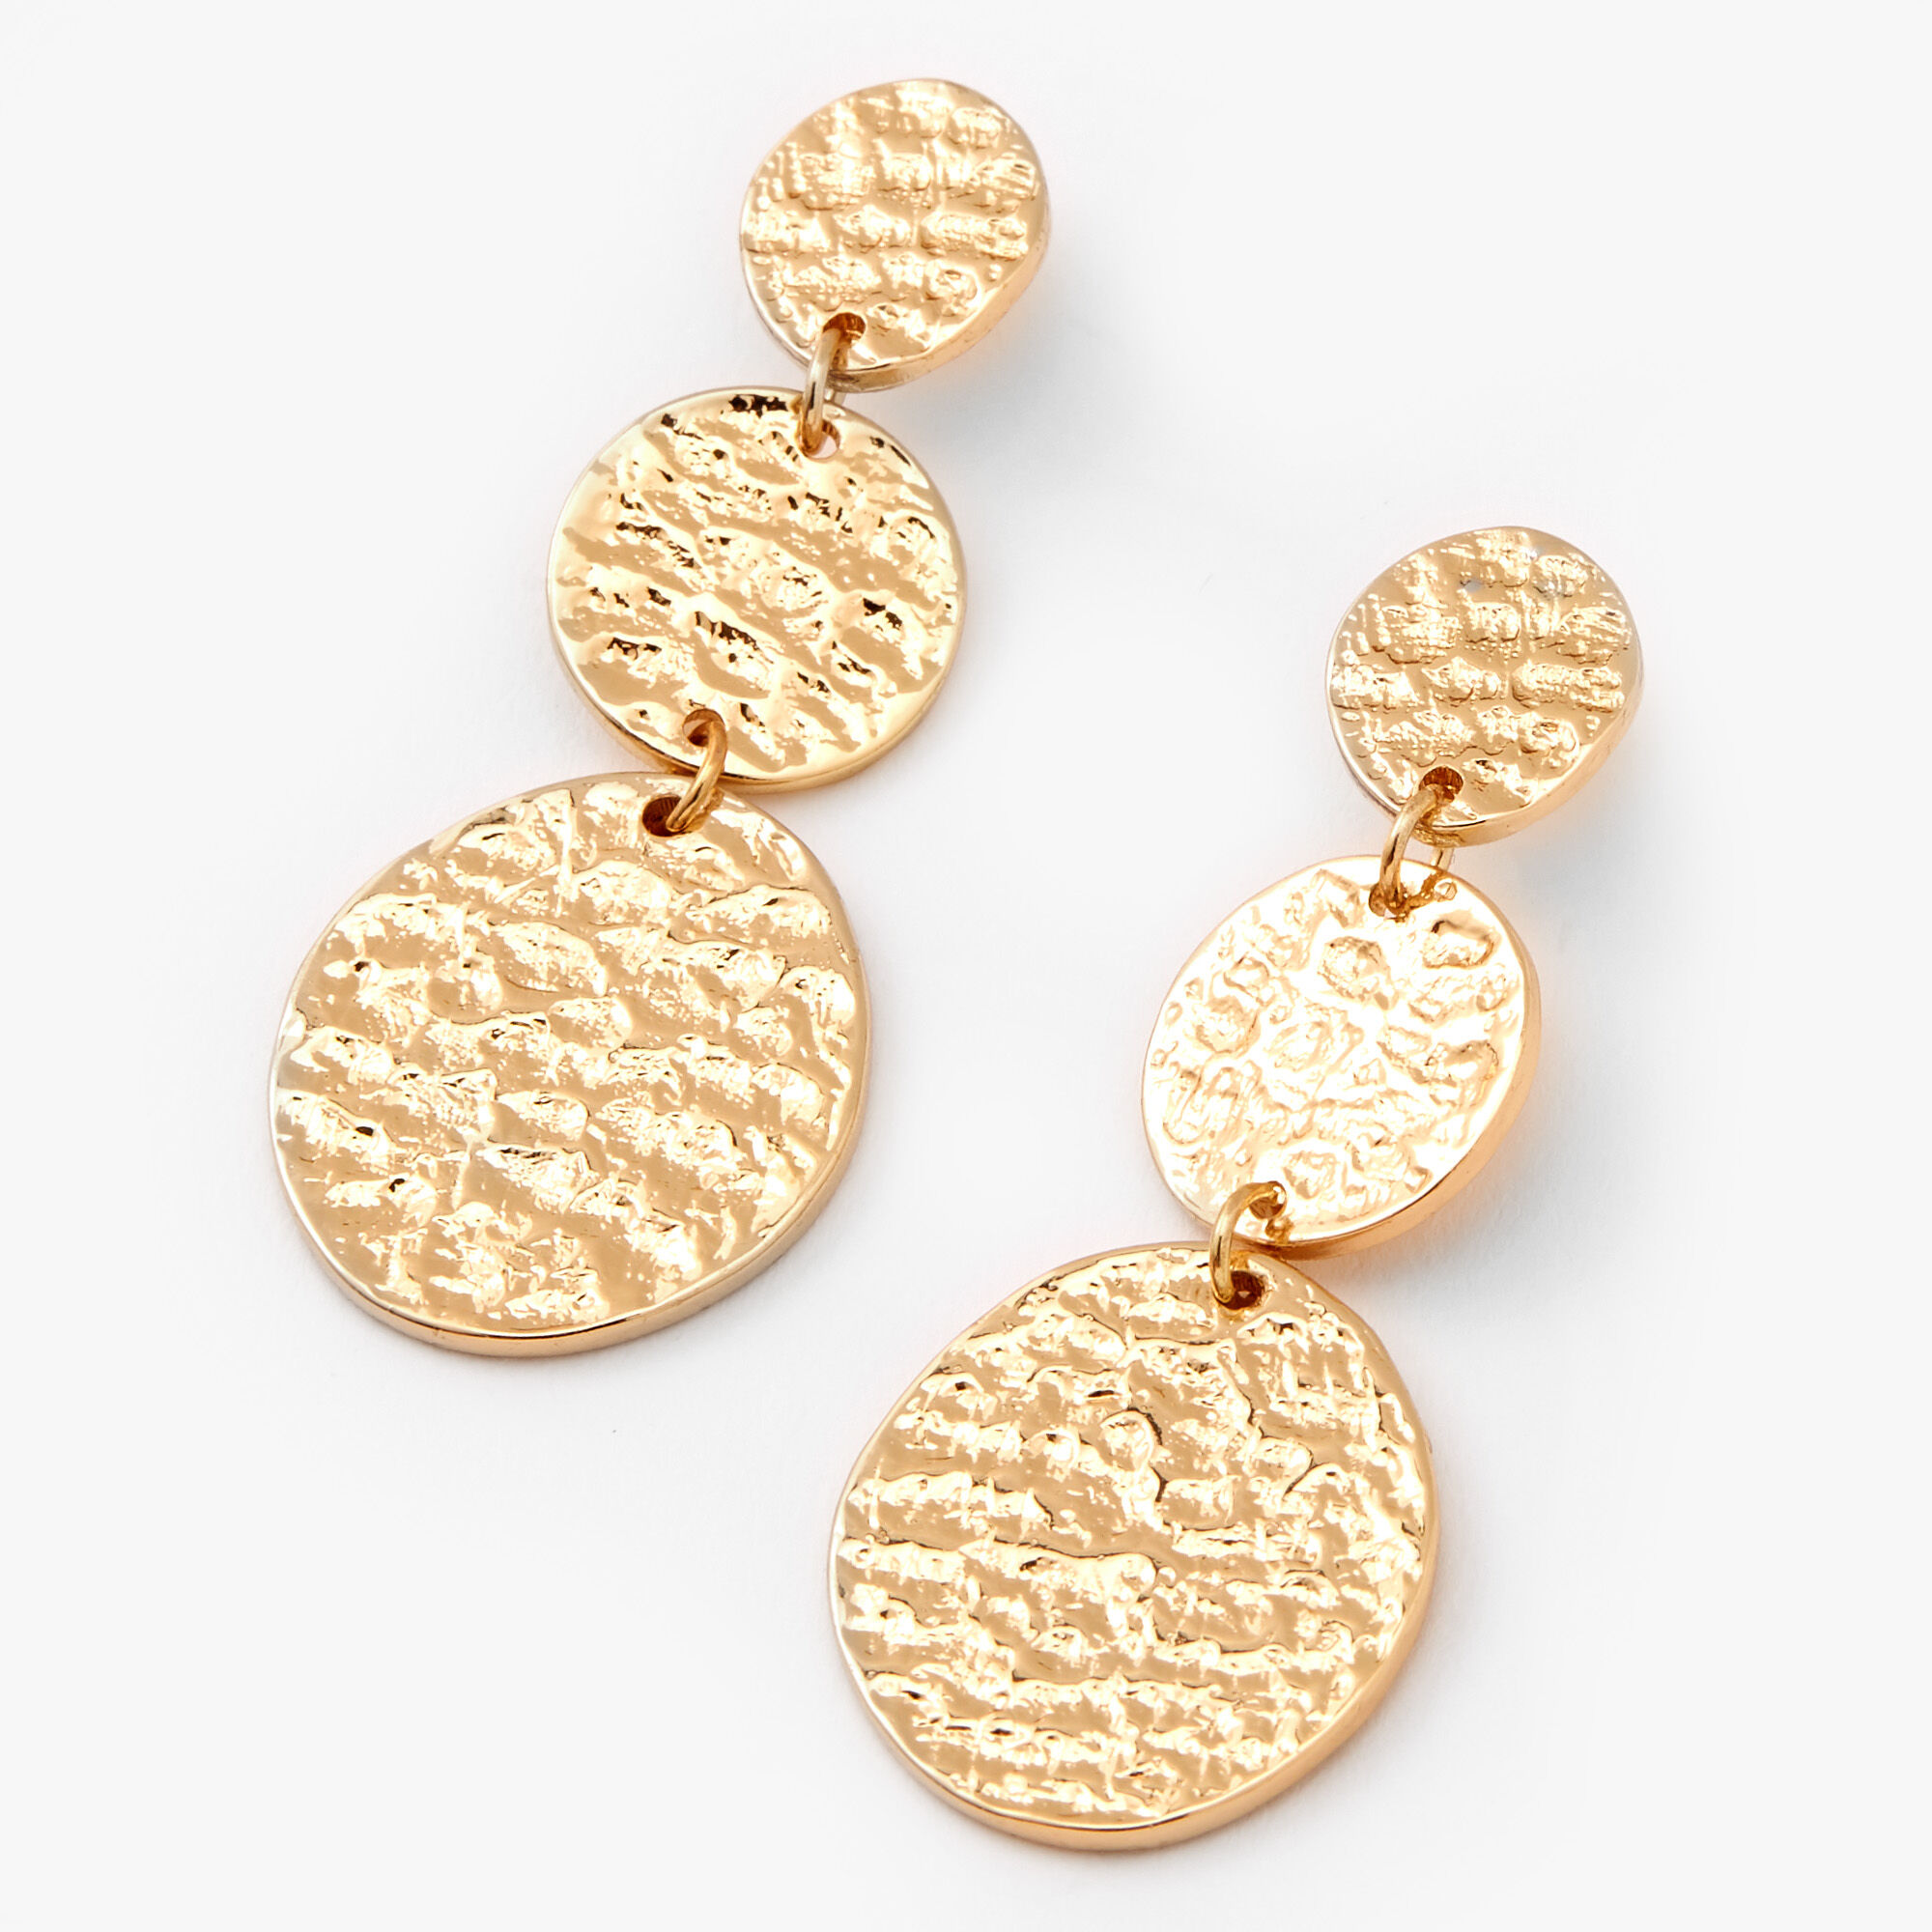 yellow gold hammered style earrings | Freedman Jewelers - Freedman Jewelers